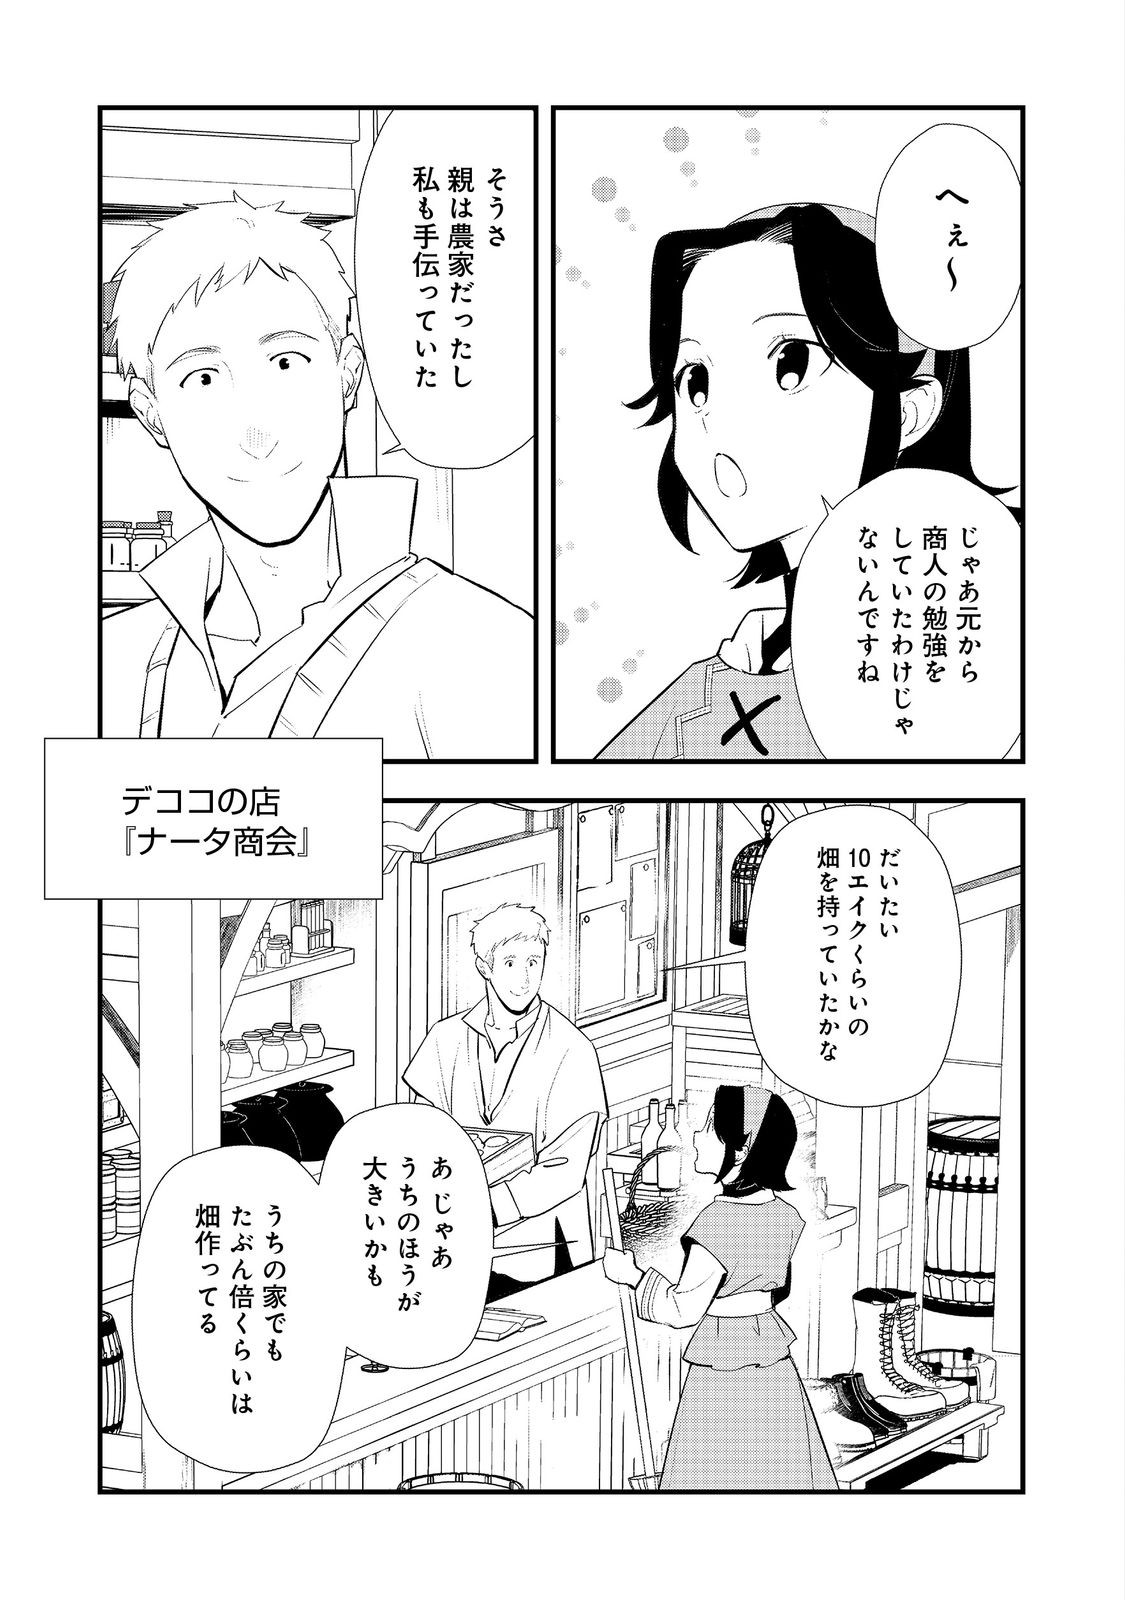 Okashi na Tensei - Chapter 54.1 - Page 1